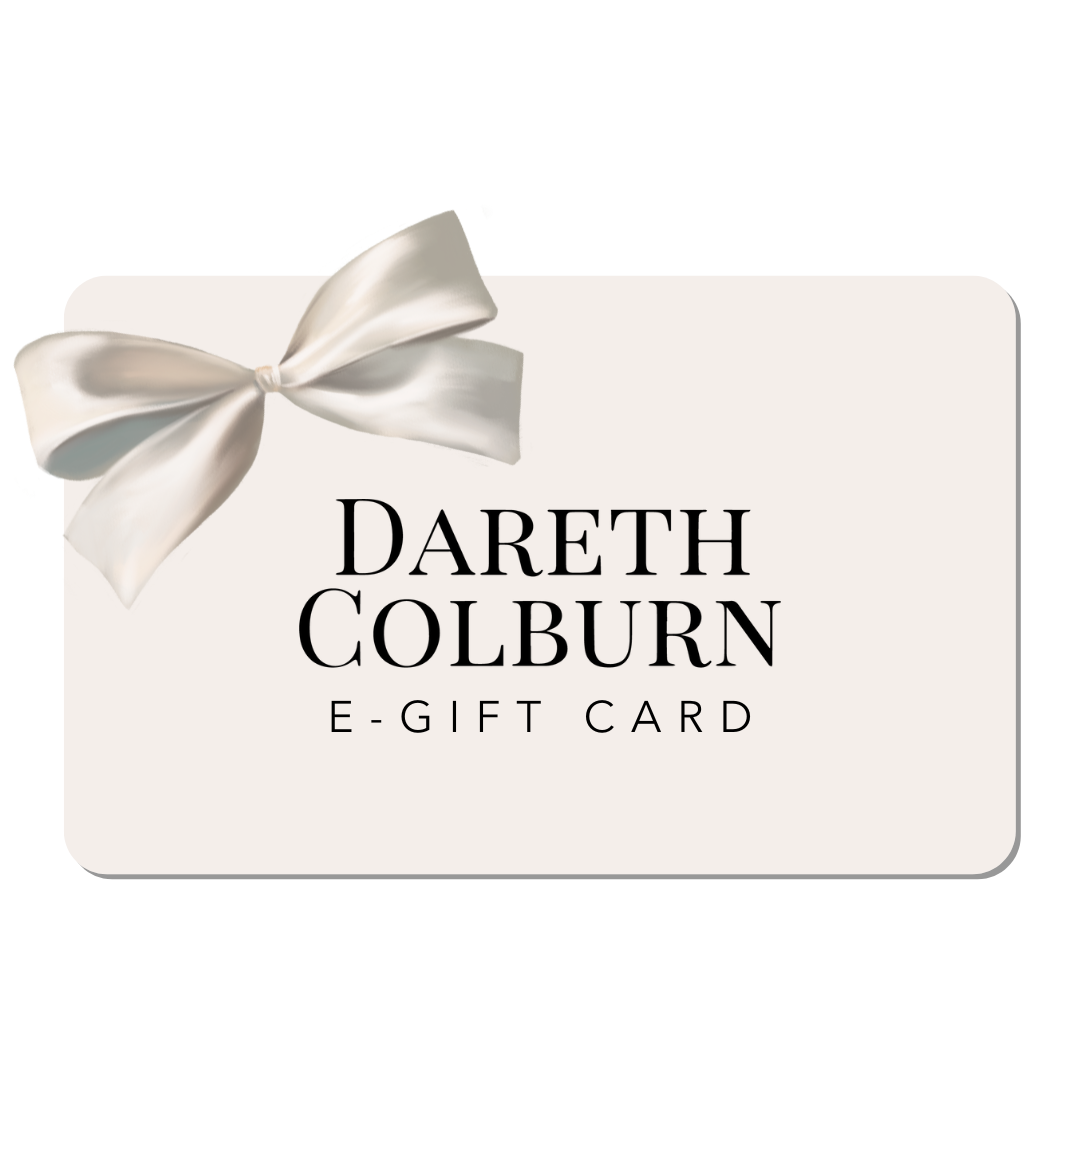 Dareth Colburn Gift Card